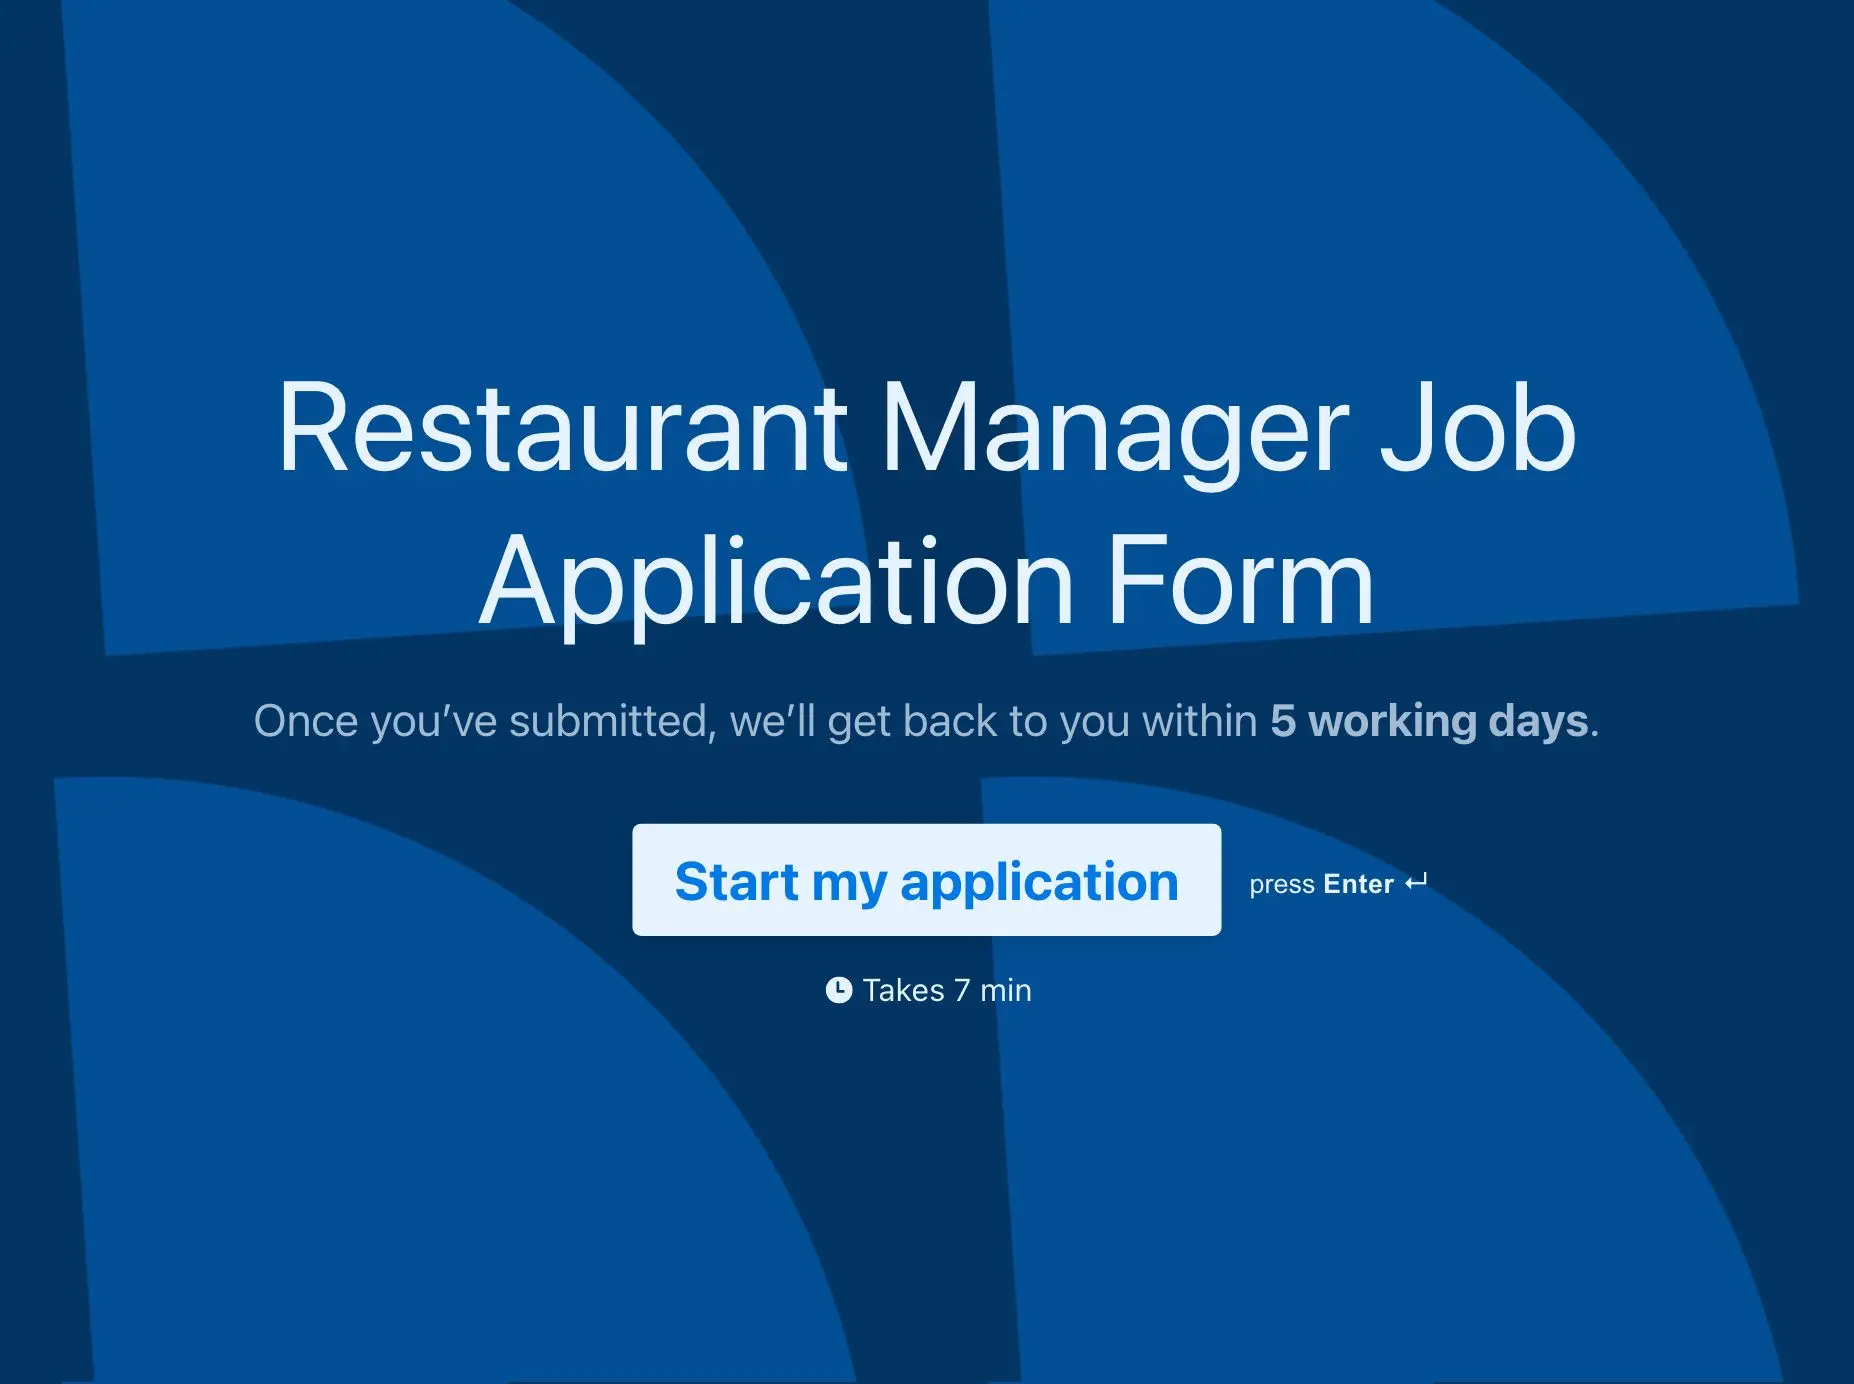 Restaurant Manager Job Application Form Template Hero